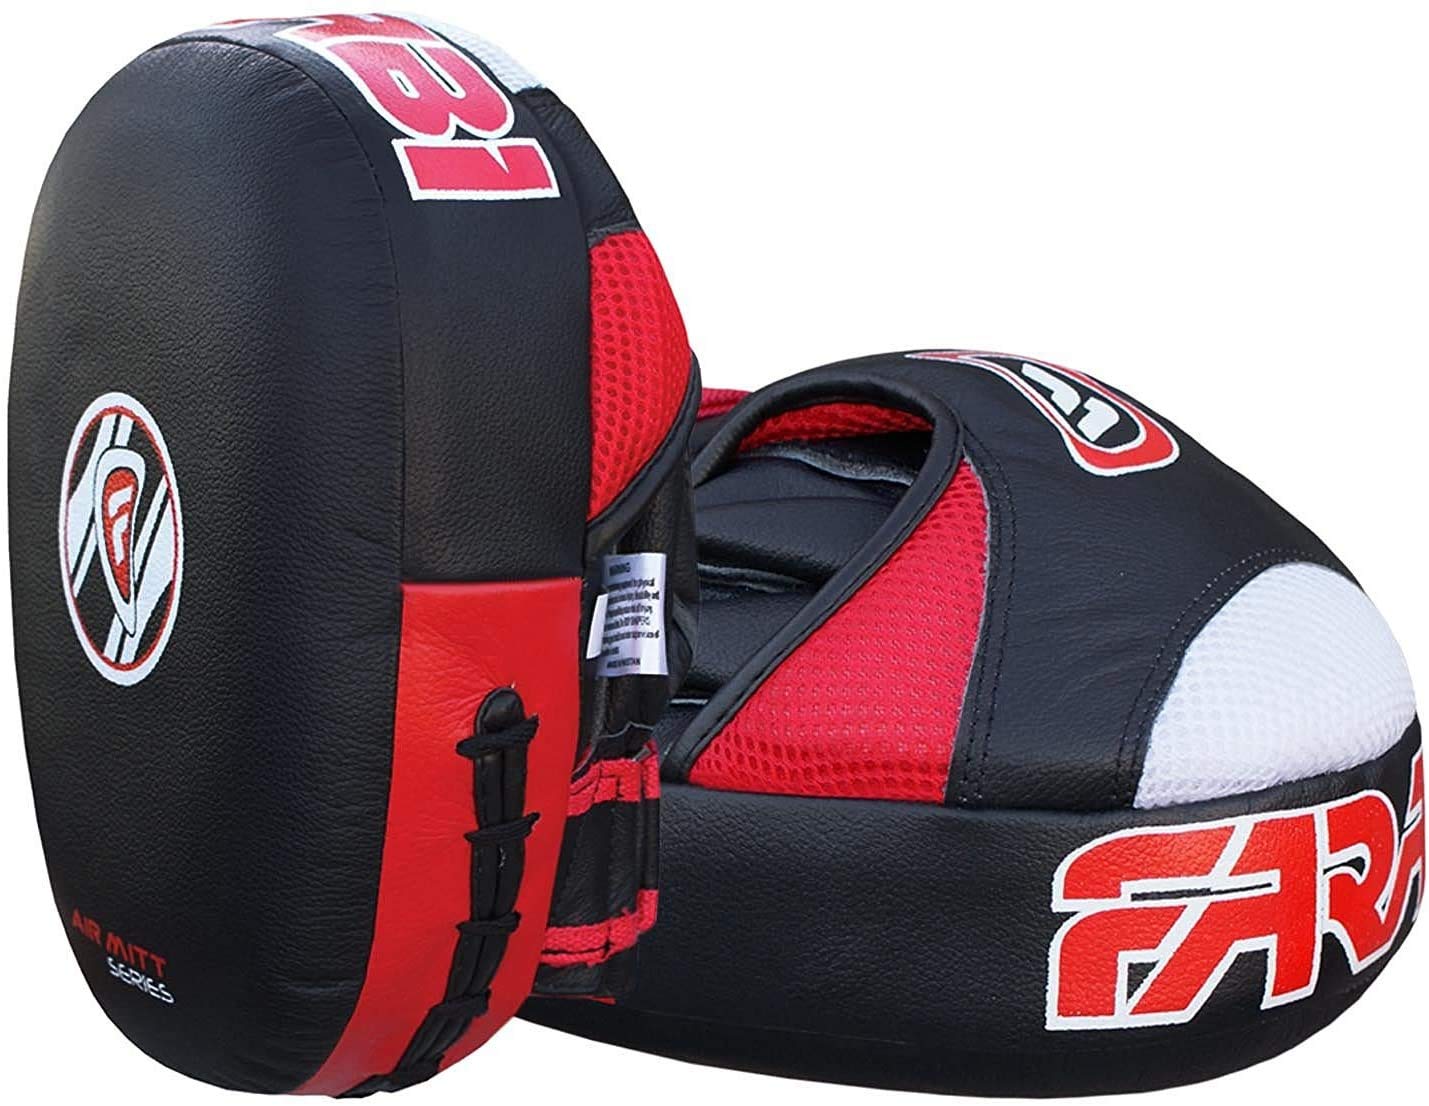 Farabi Sports Focus Pads Air Hand Mitts Muay Thai Kickboxen Punch Pads (Black/Red)